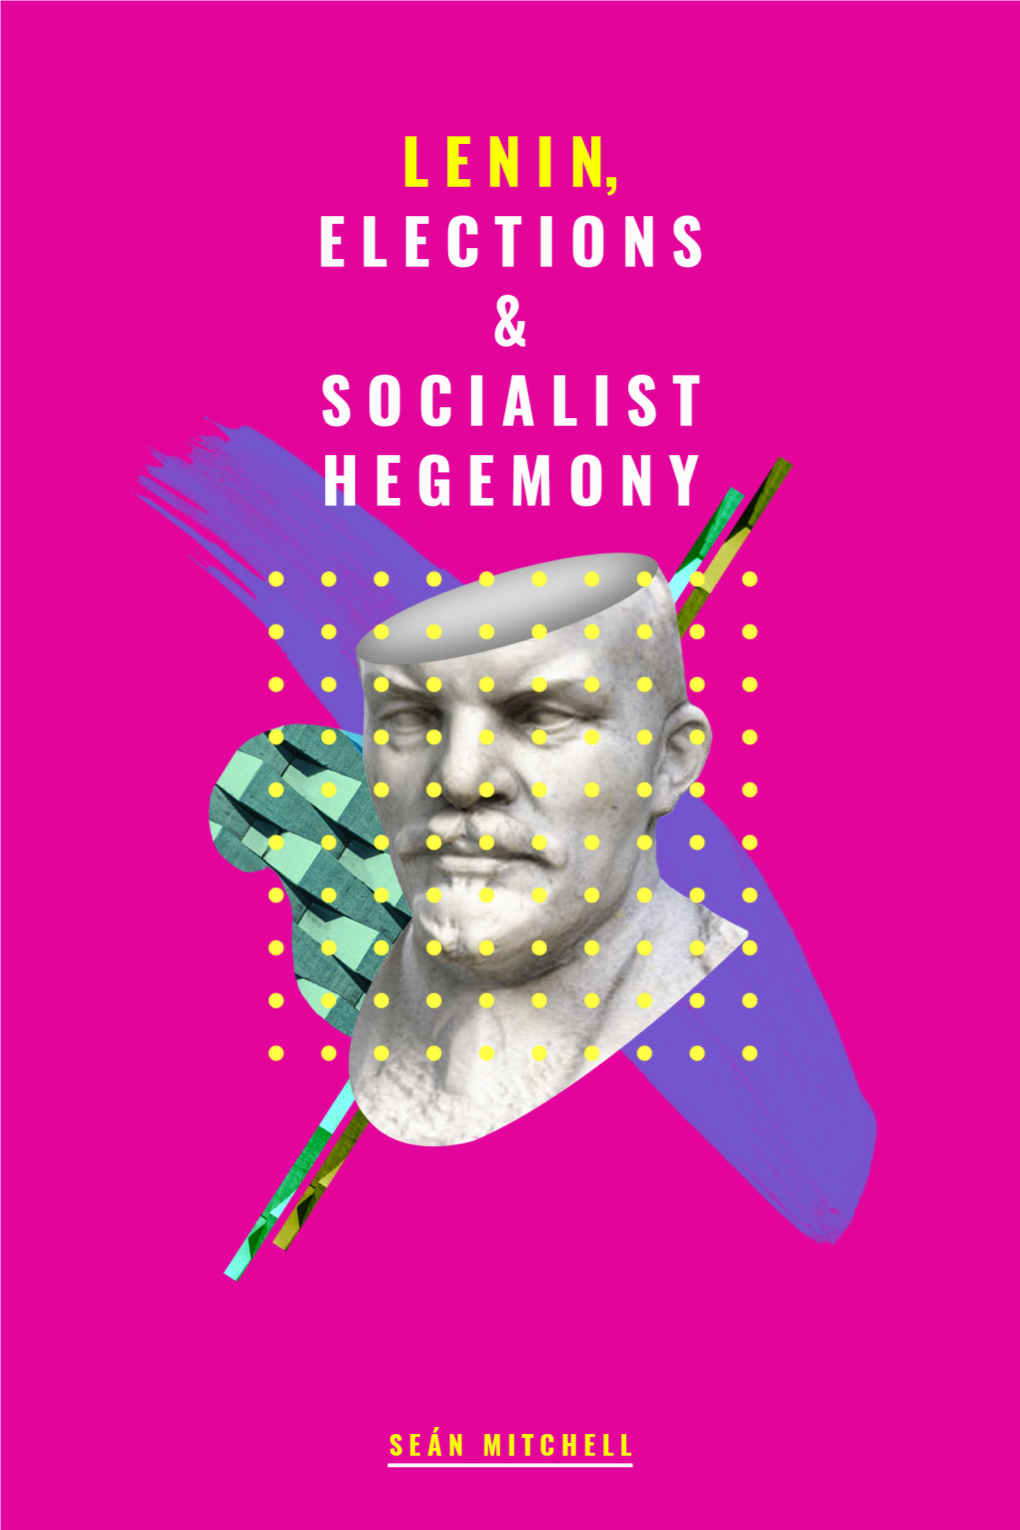 Lenin, Elections & Socialist Hegemony